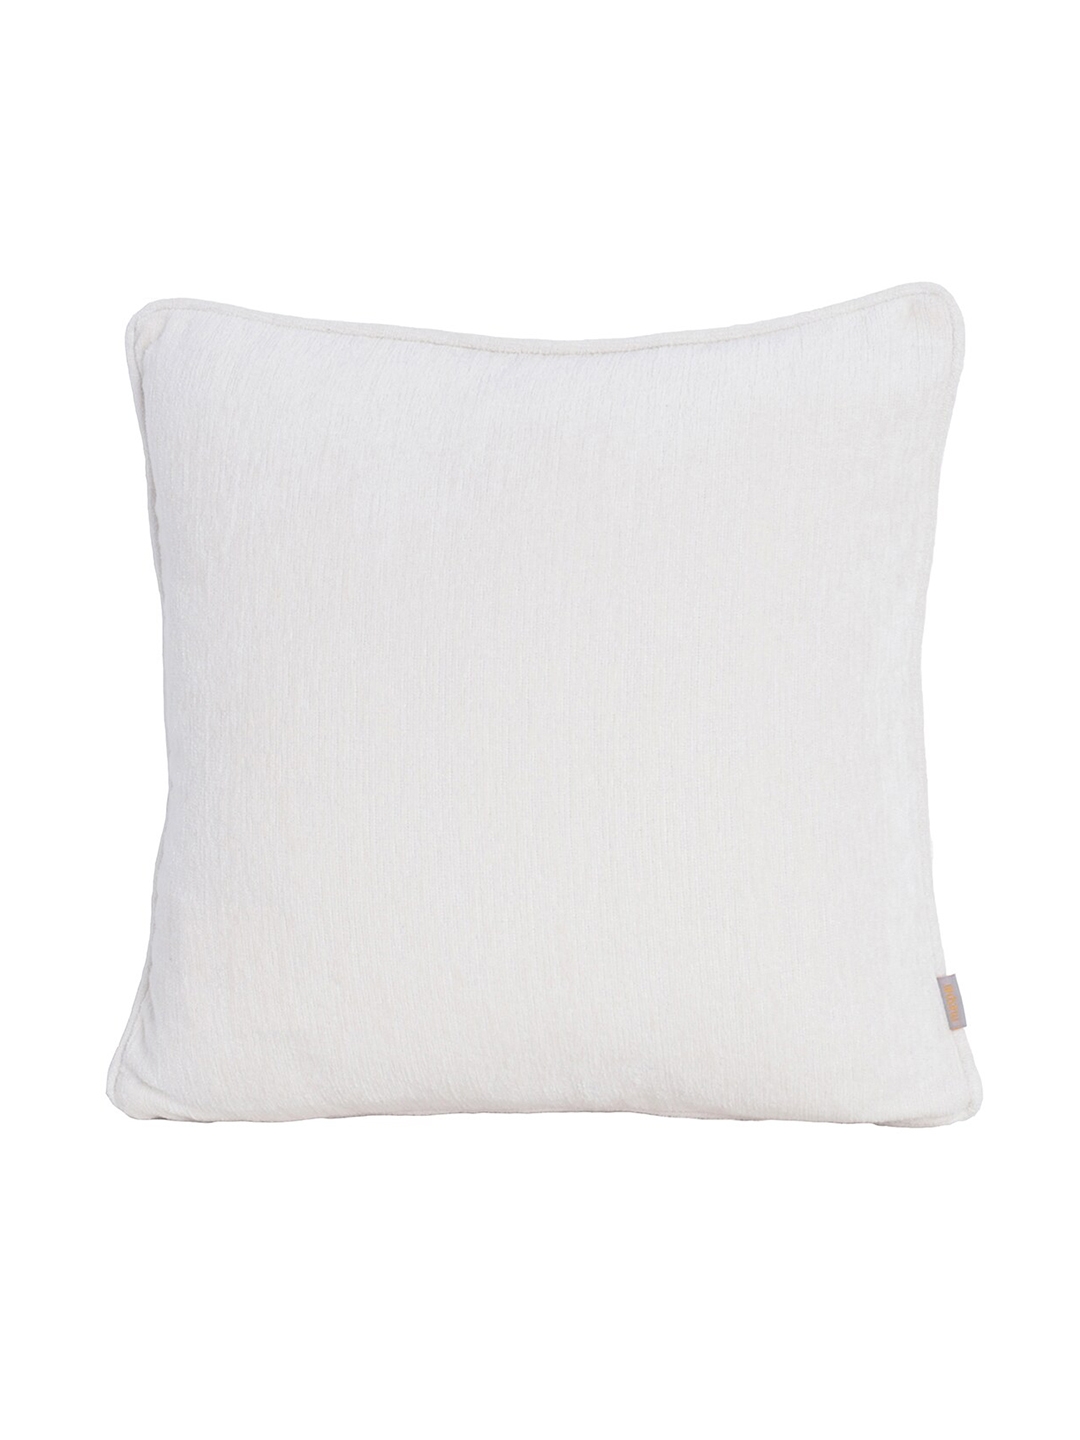 MASPAR Beige Solid Pure Cotton Square Cushion Cover